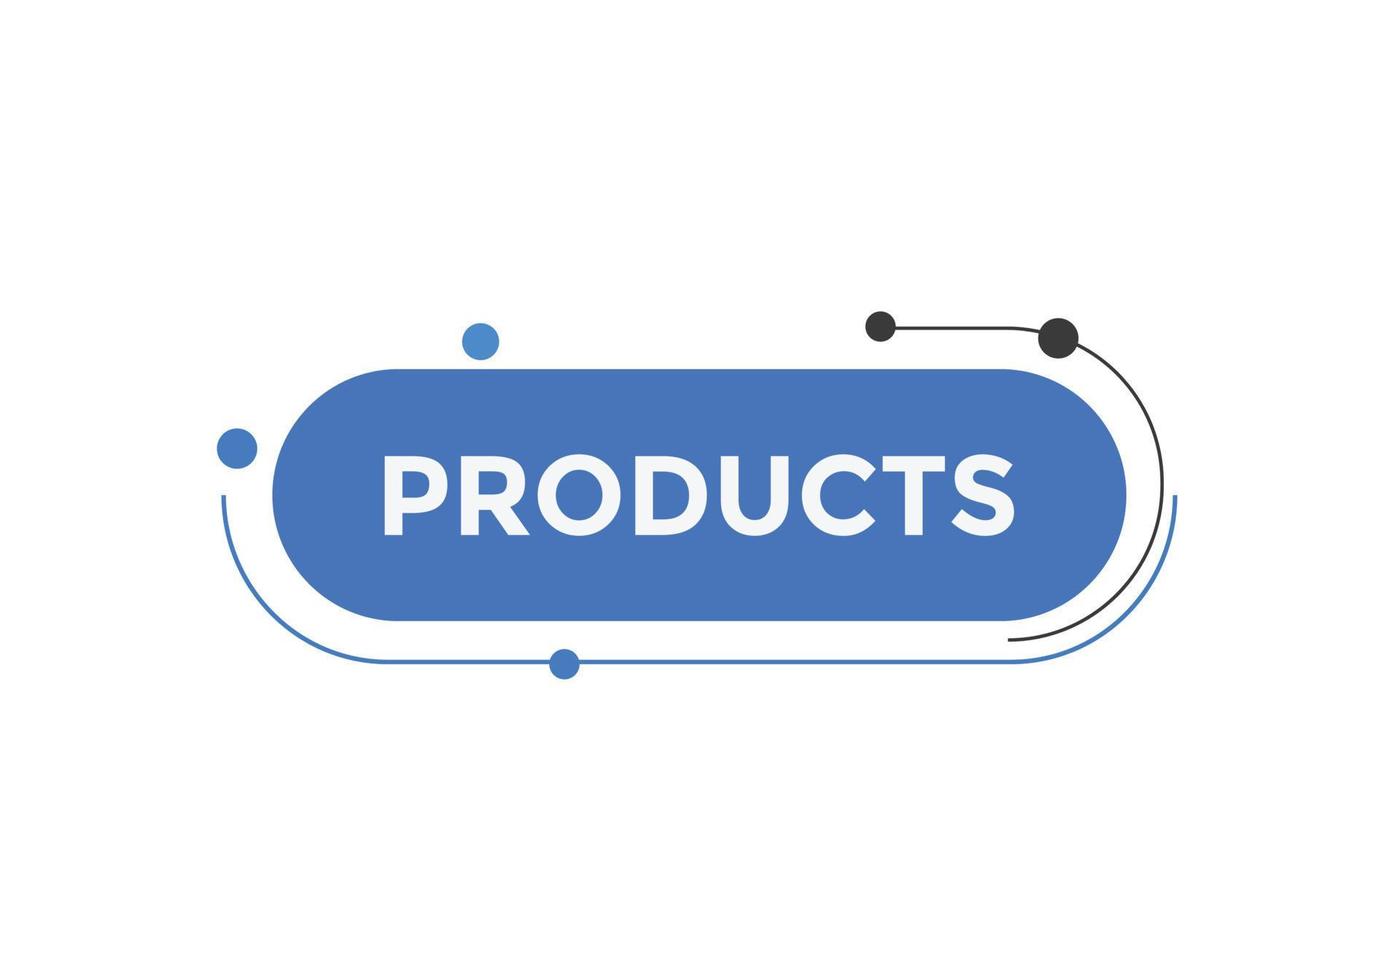 botón de productos burbuja de diálogo. banner web colorido de productos. ilustración vectorial vector